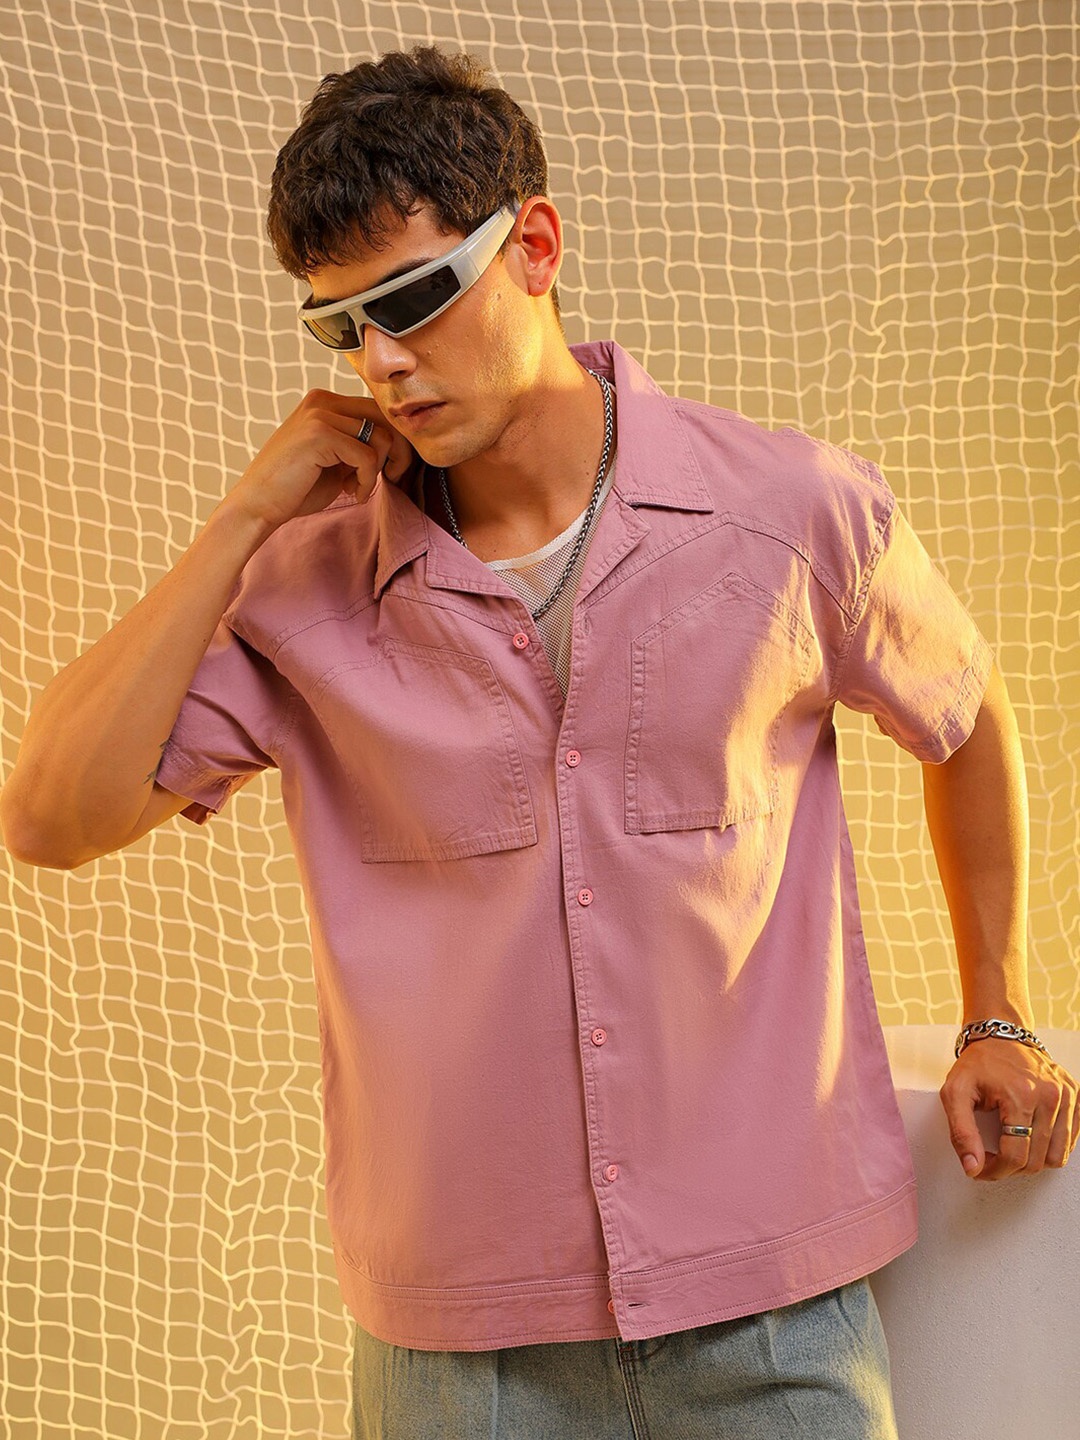 

The Indian Garage Co Men Boxy Opaque Casual Shirt, Pink